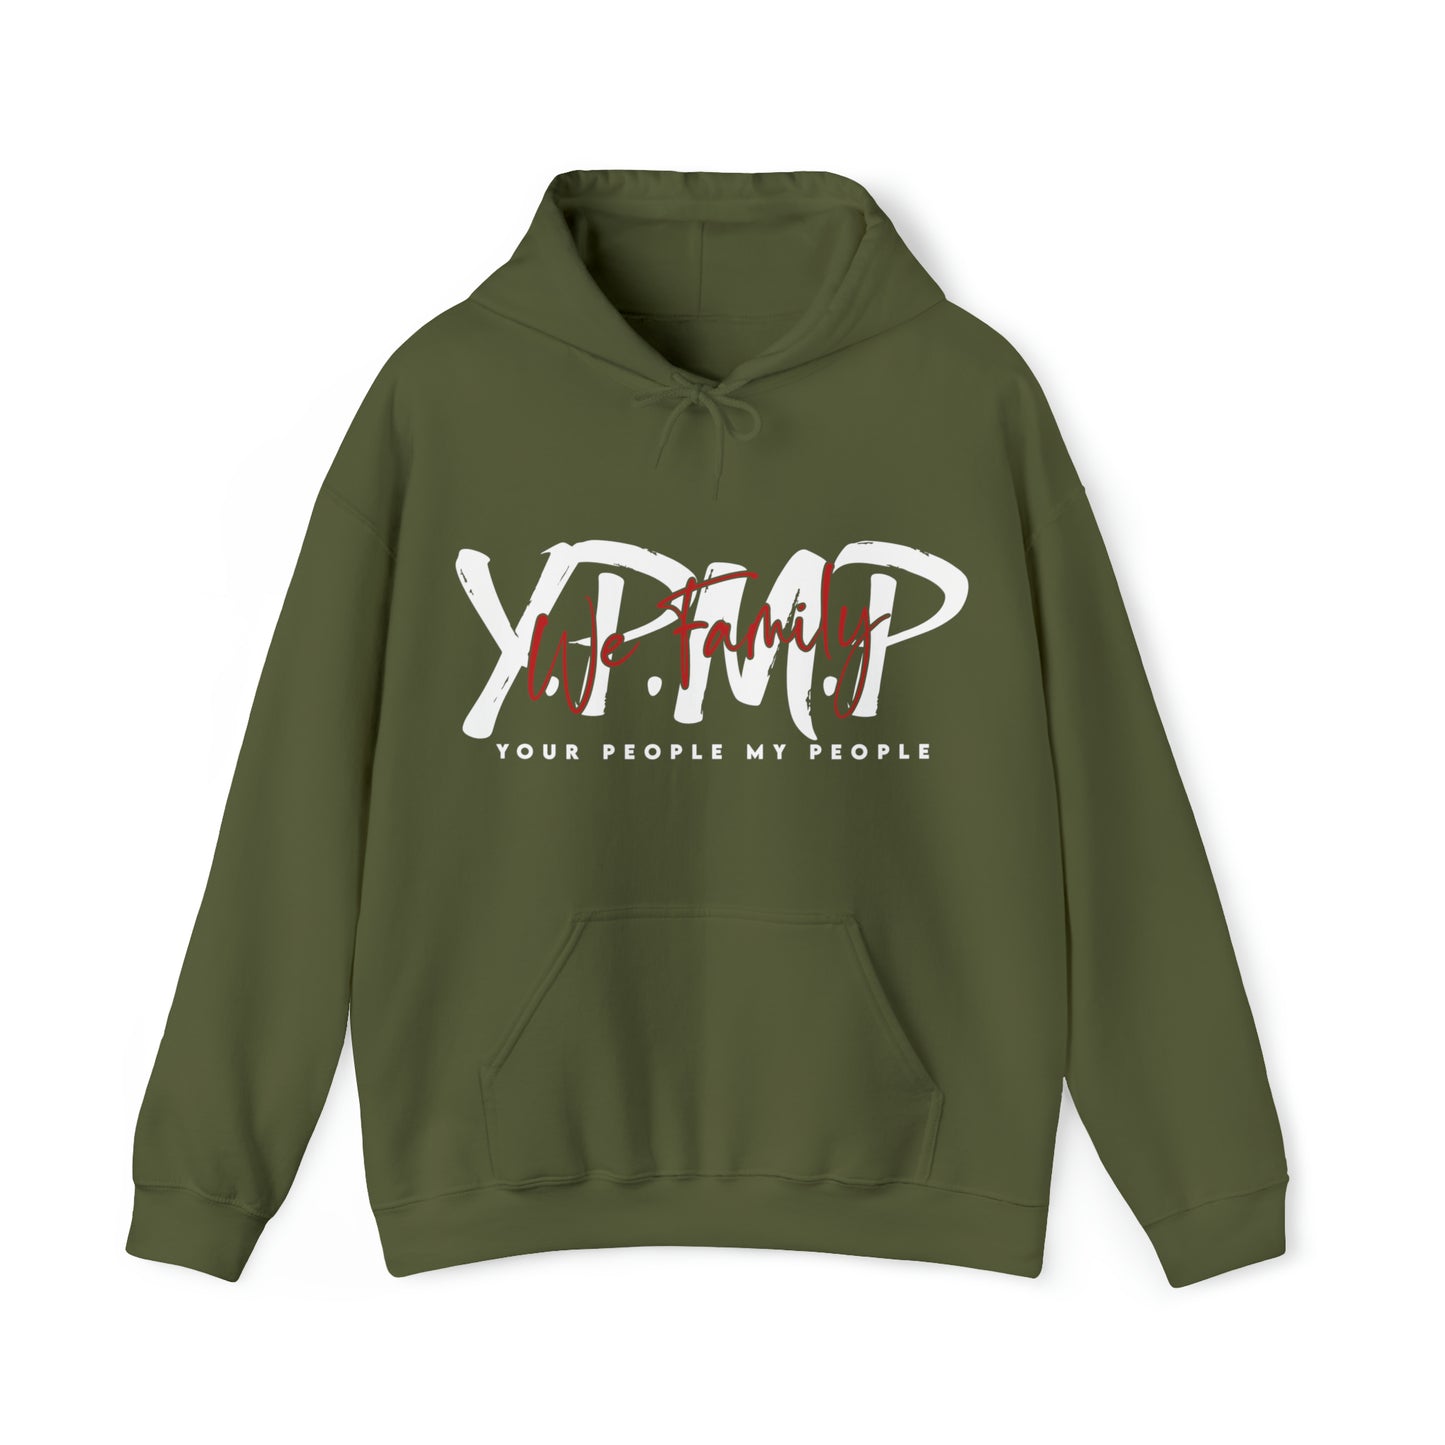 YPMP white initial w/o brand name